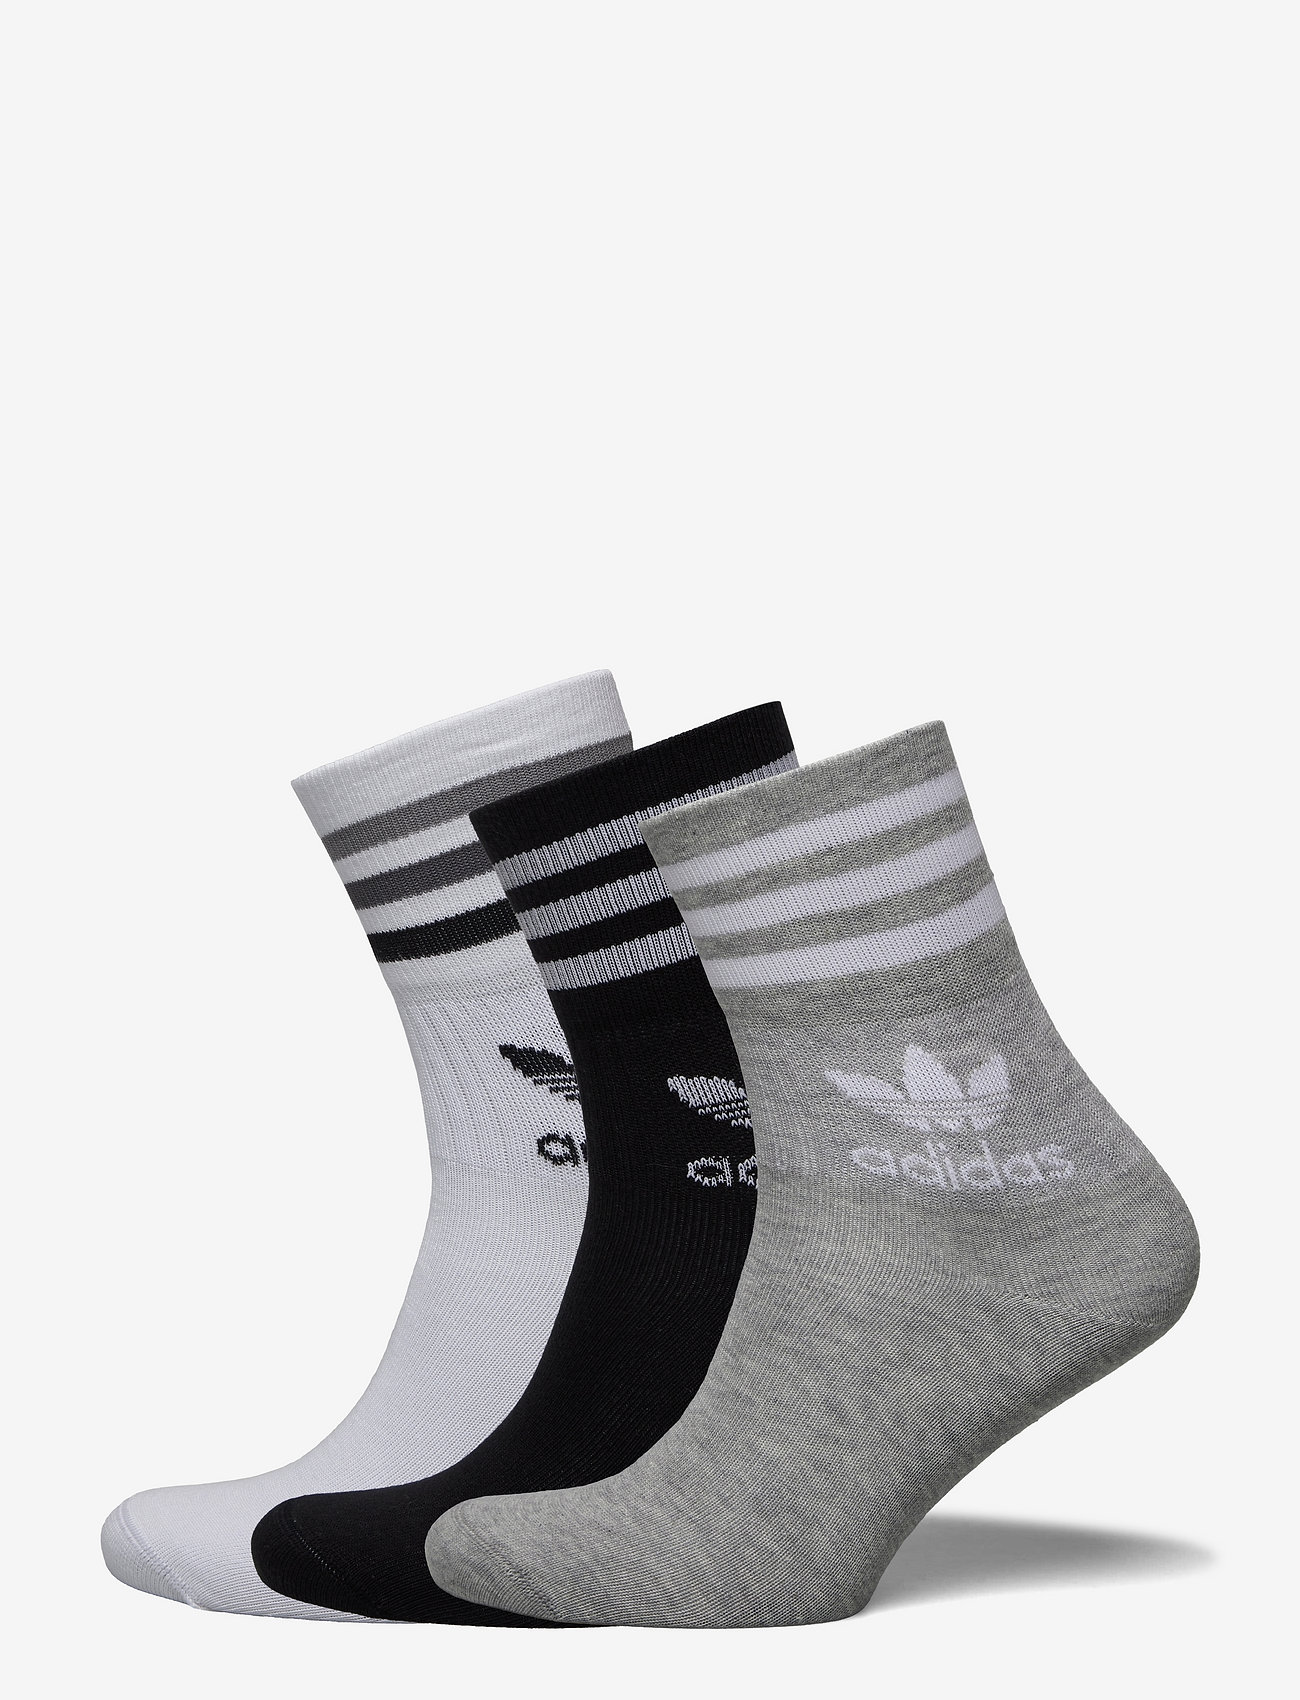 adidas Originals Mid Cut Crew Socks 3 Pairs - Regular socks | Boozt.com